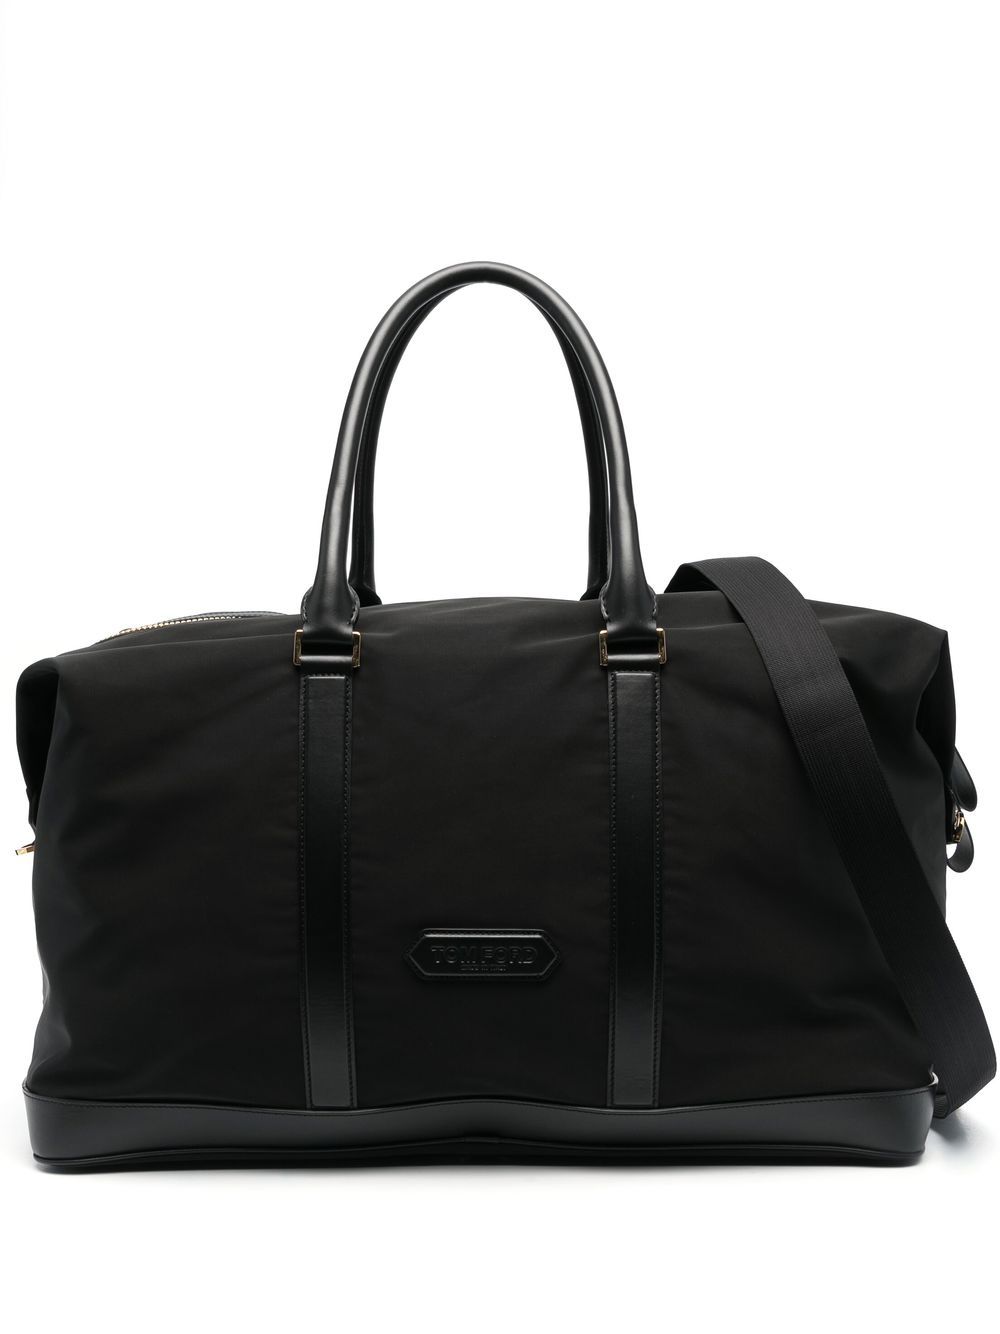 Black Leather Duffel Handbag for Men with Logo Detail